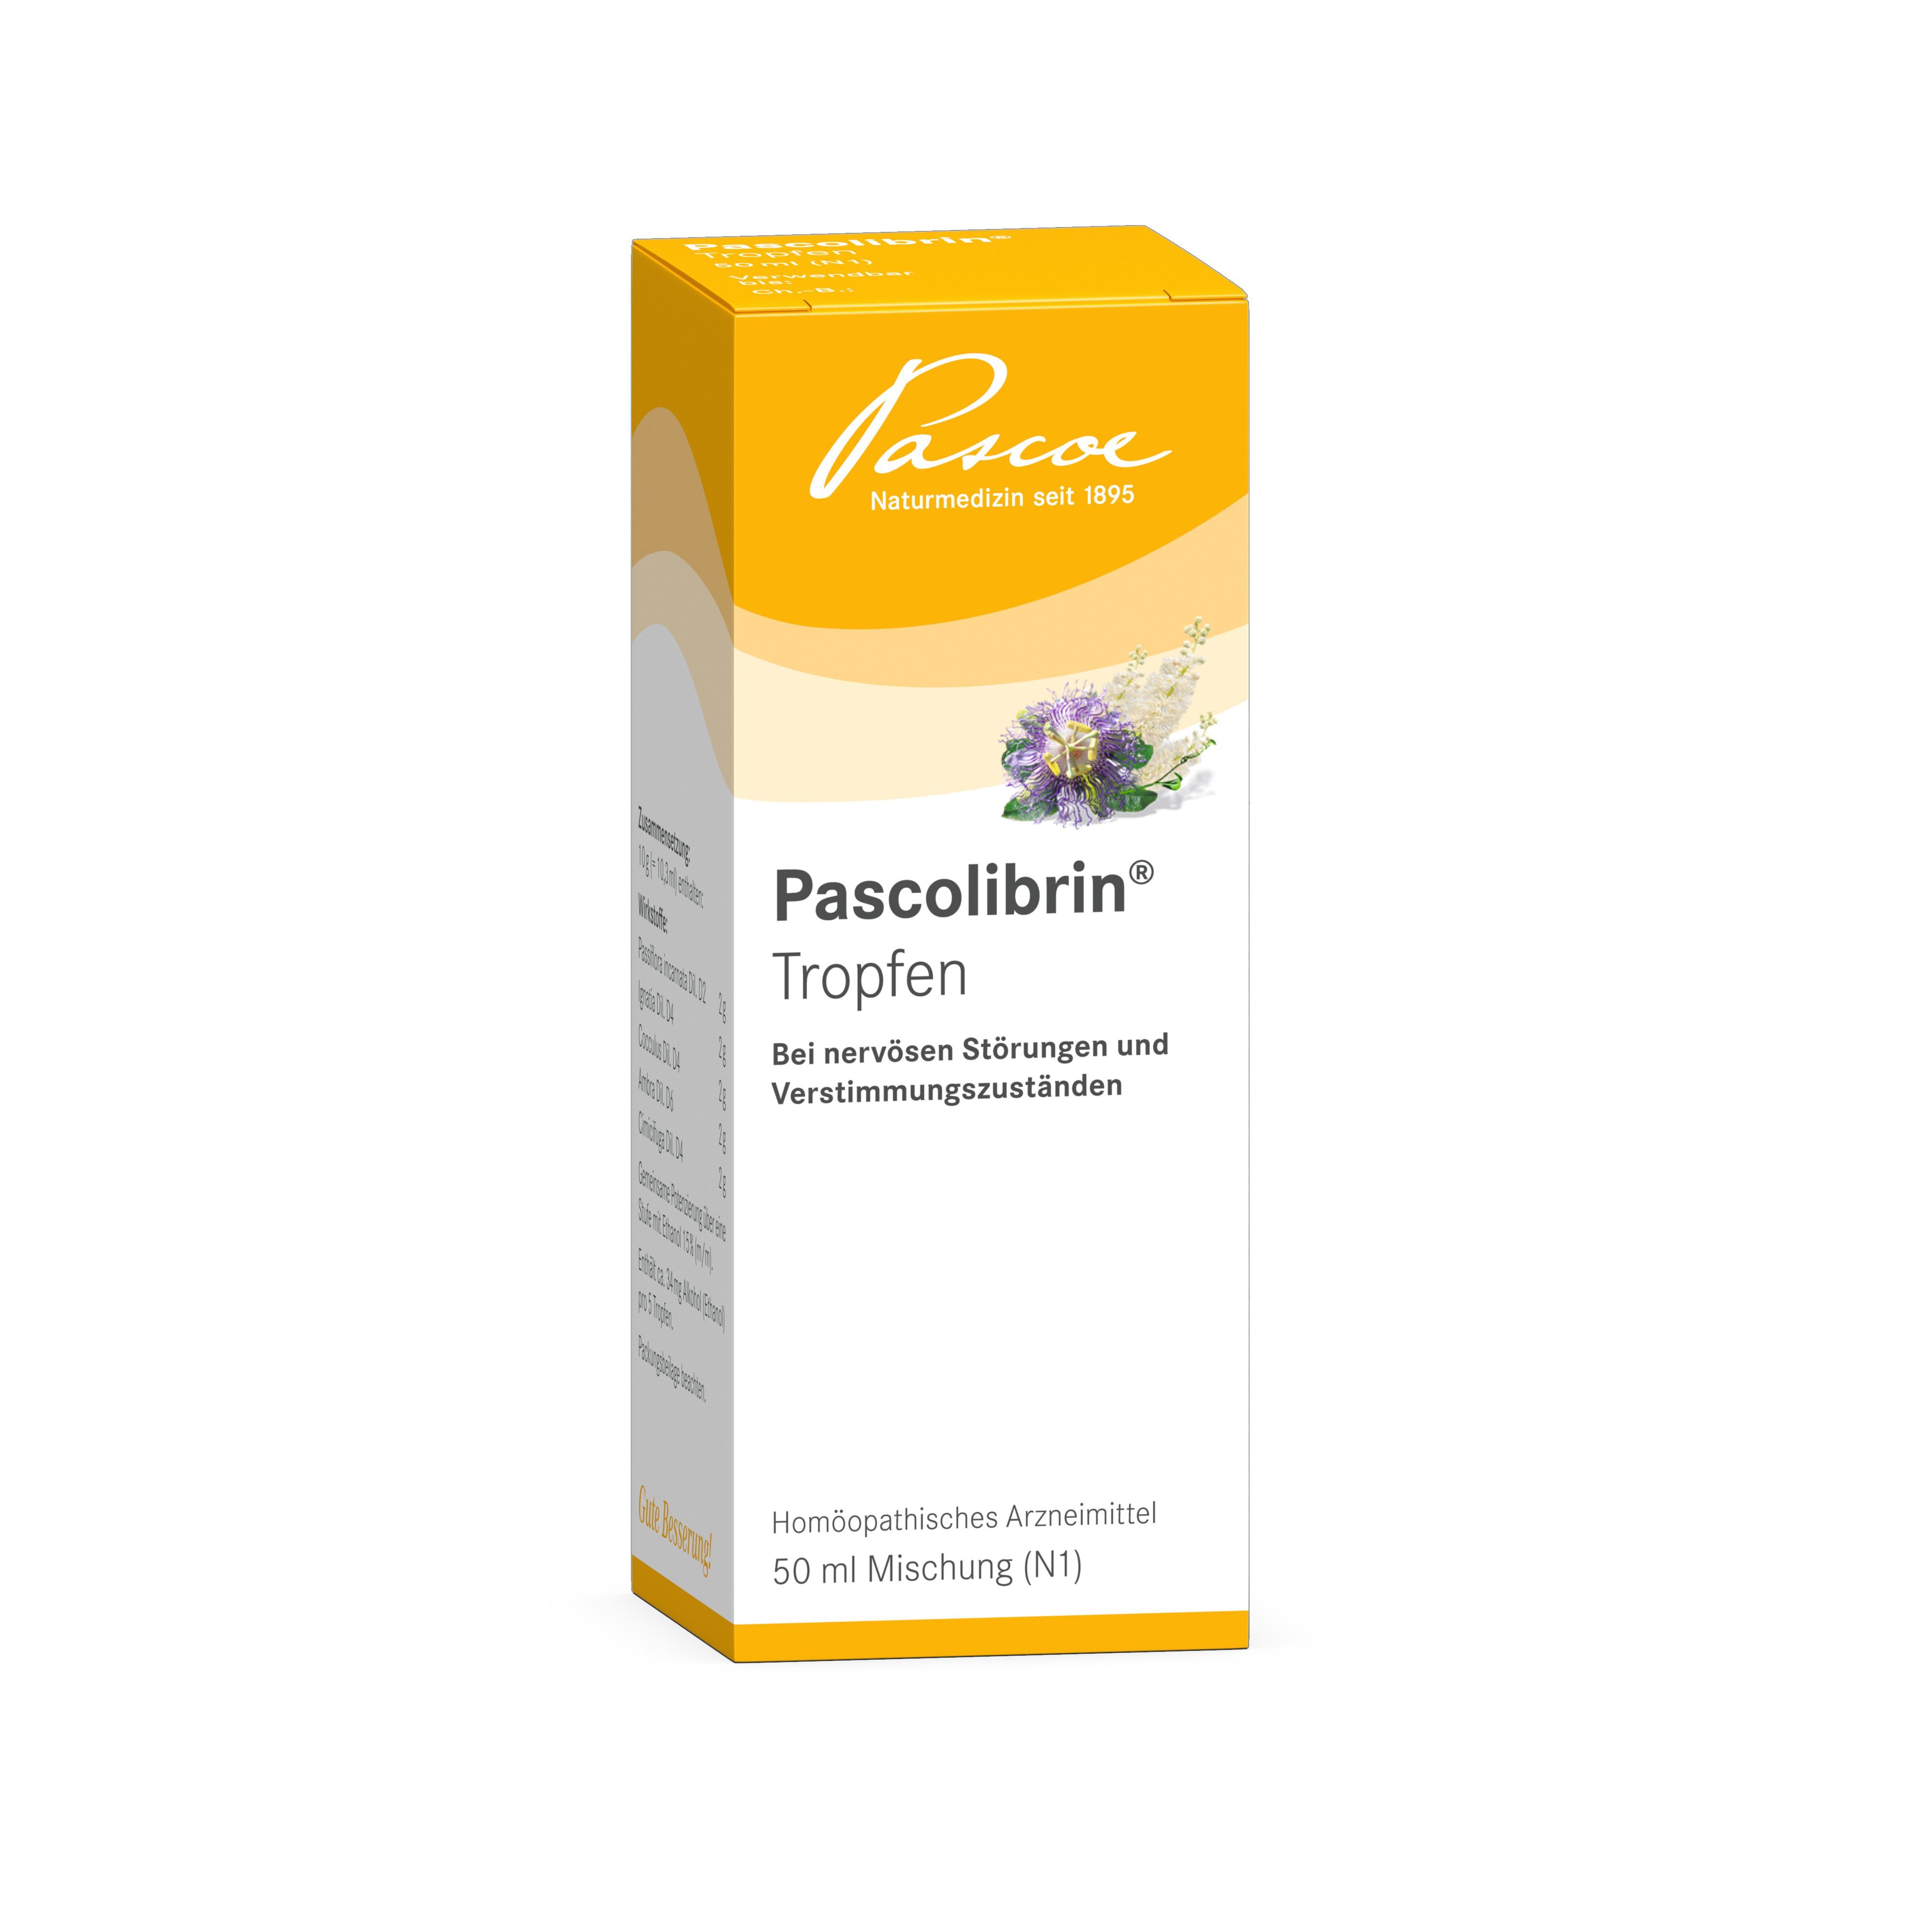 Pascolibrin 50 ml Packshot PZN 07213905